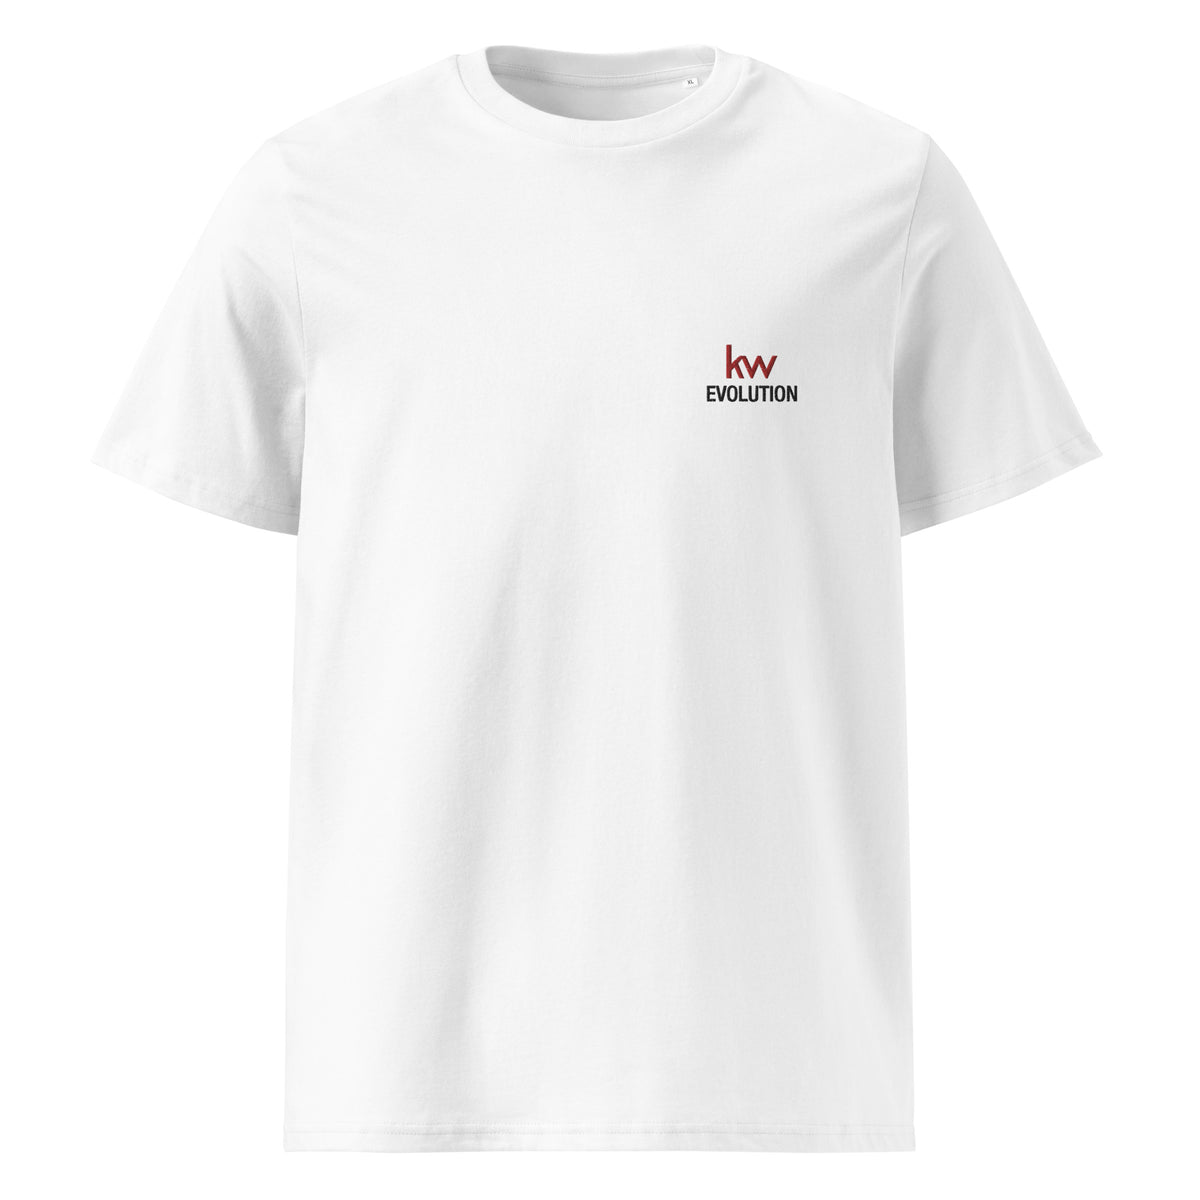 T-Shirt Unisexe Brodé - KW Evolution